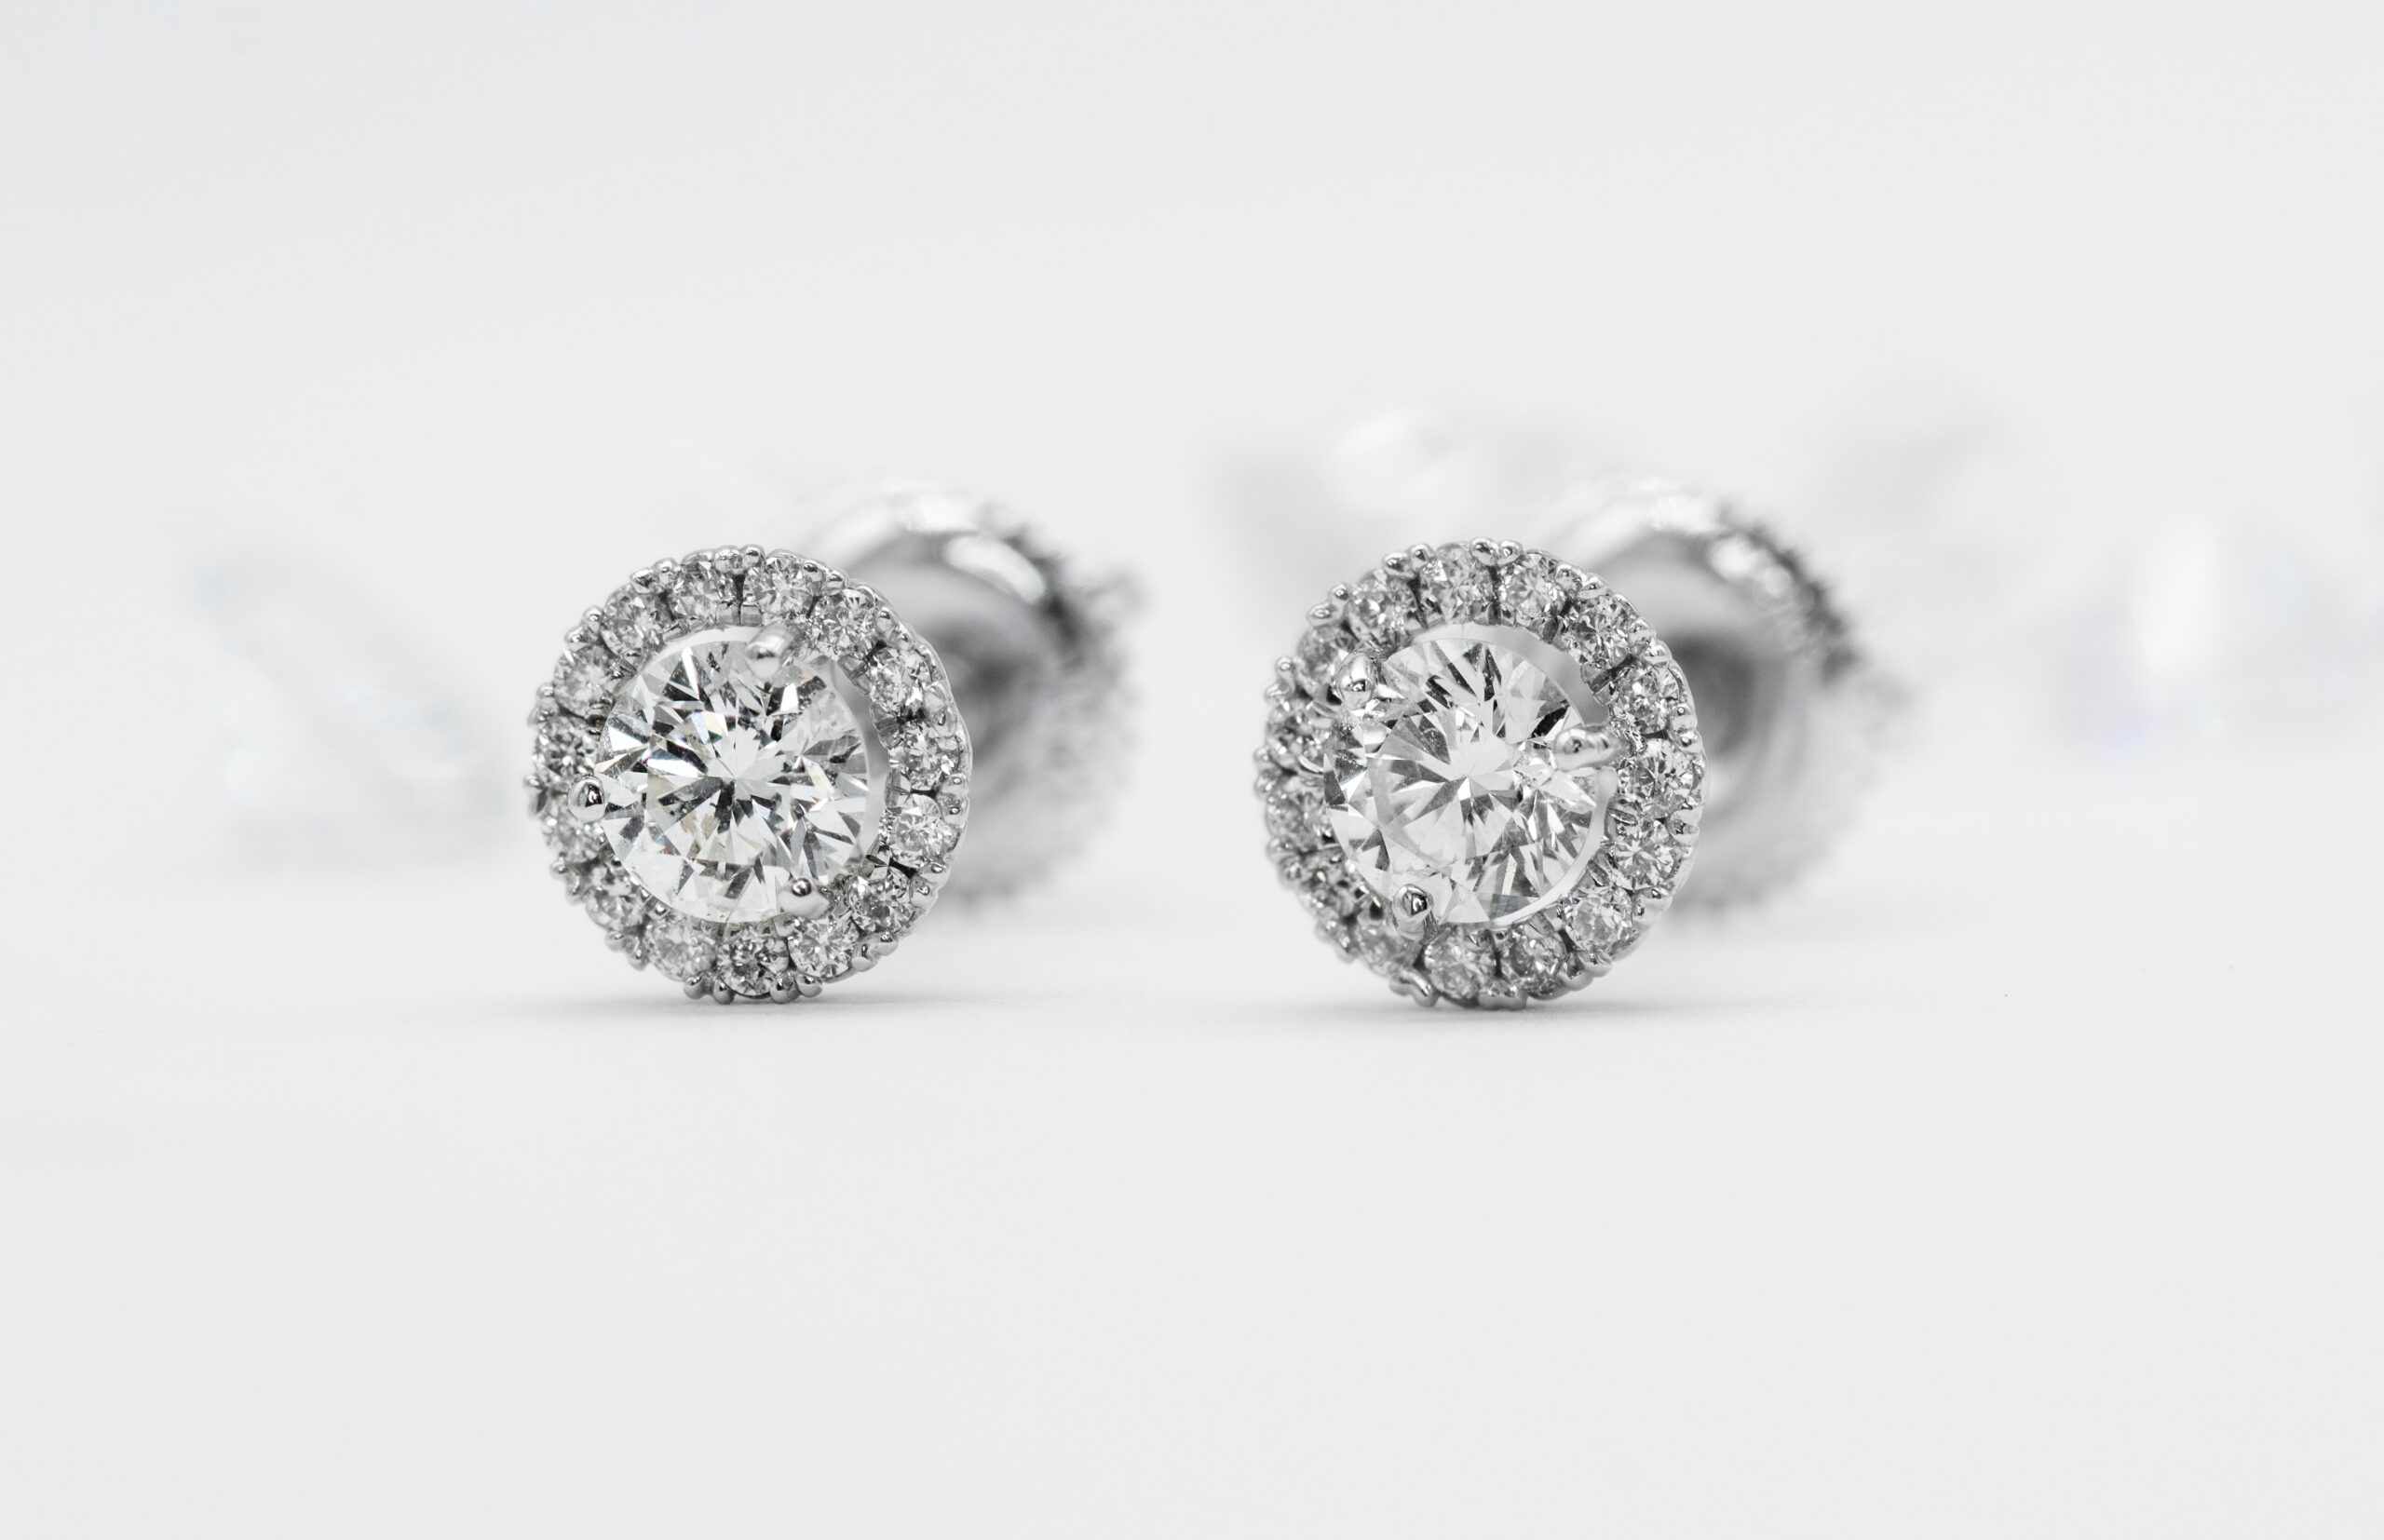 Sell diamond earrings Canada